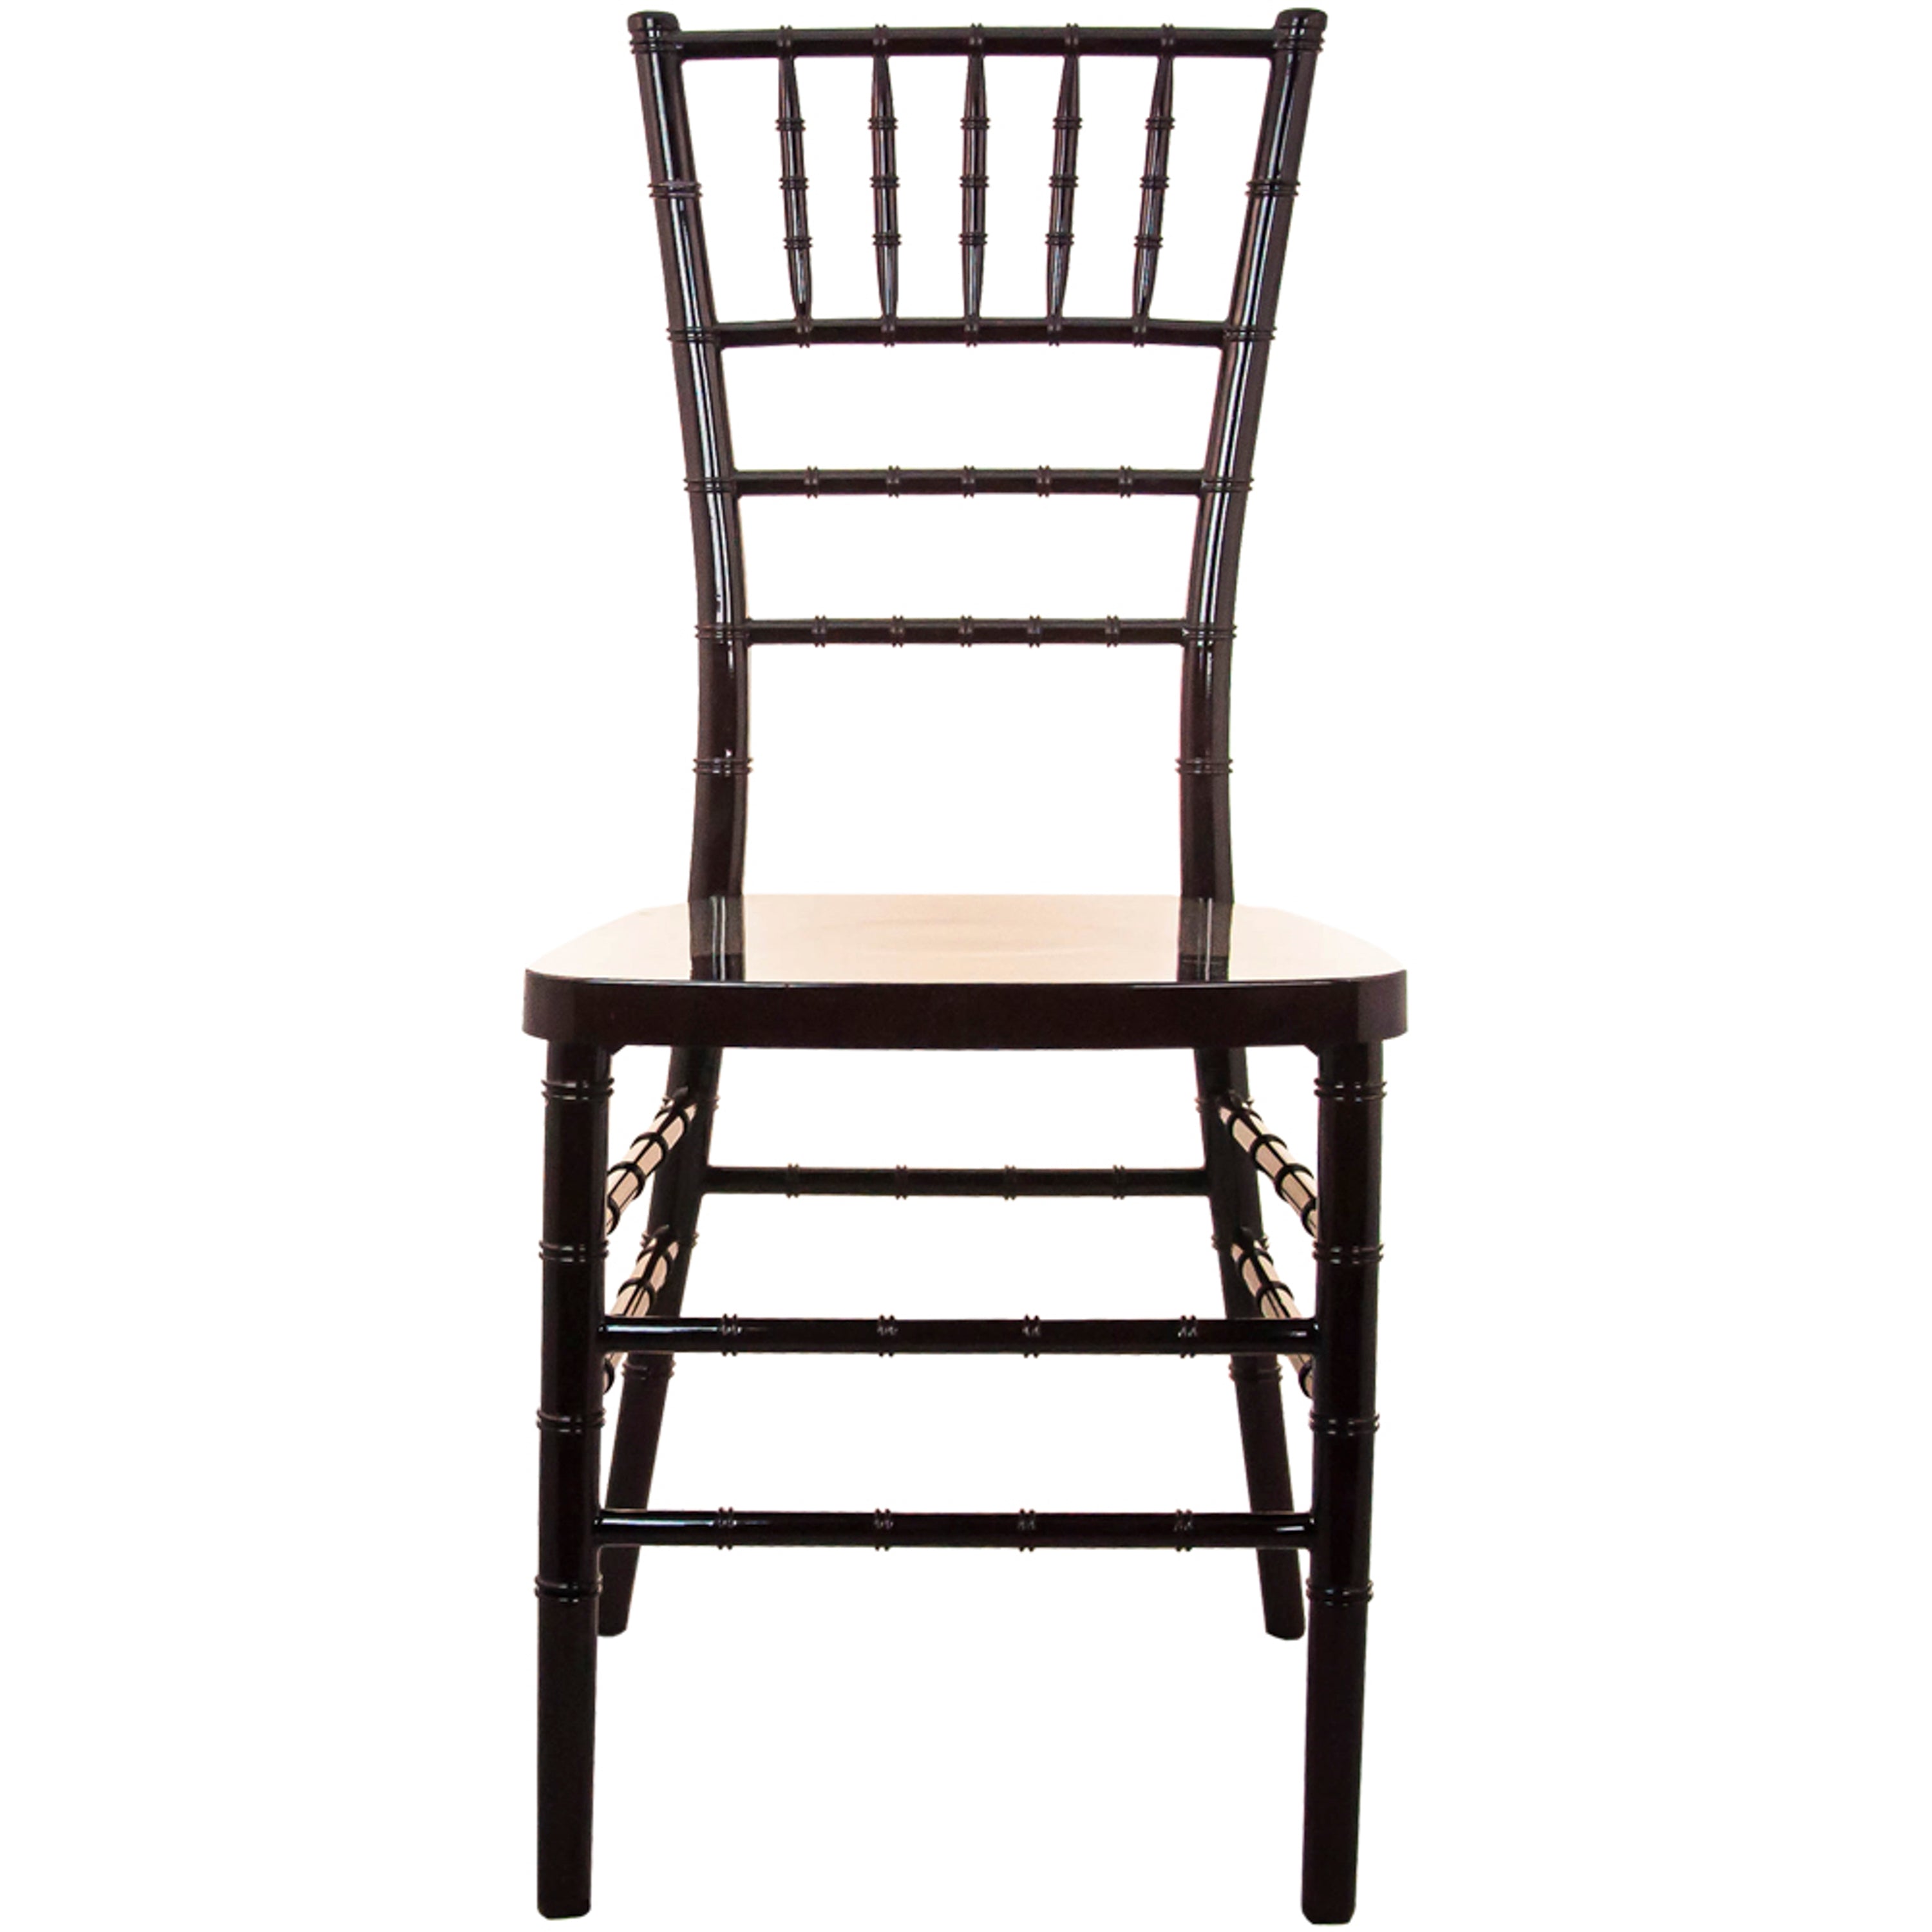 Advantage Resin Chiavari Chair-Resin Chiavari Chair-Flash Furniture-Wall2Wall Furnishings